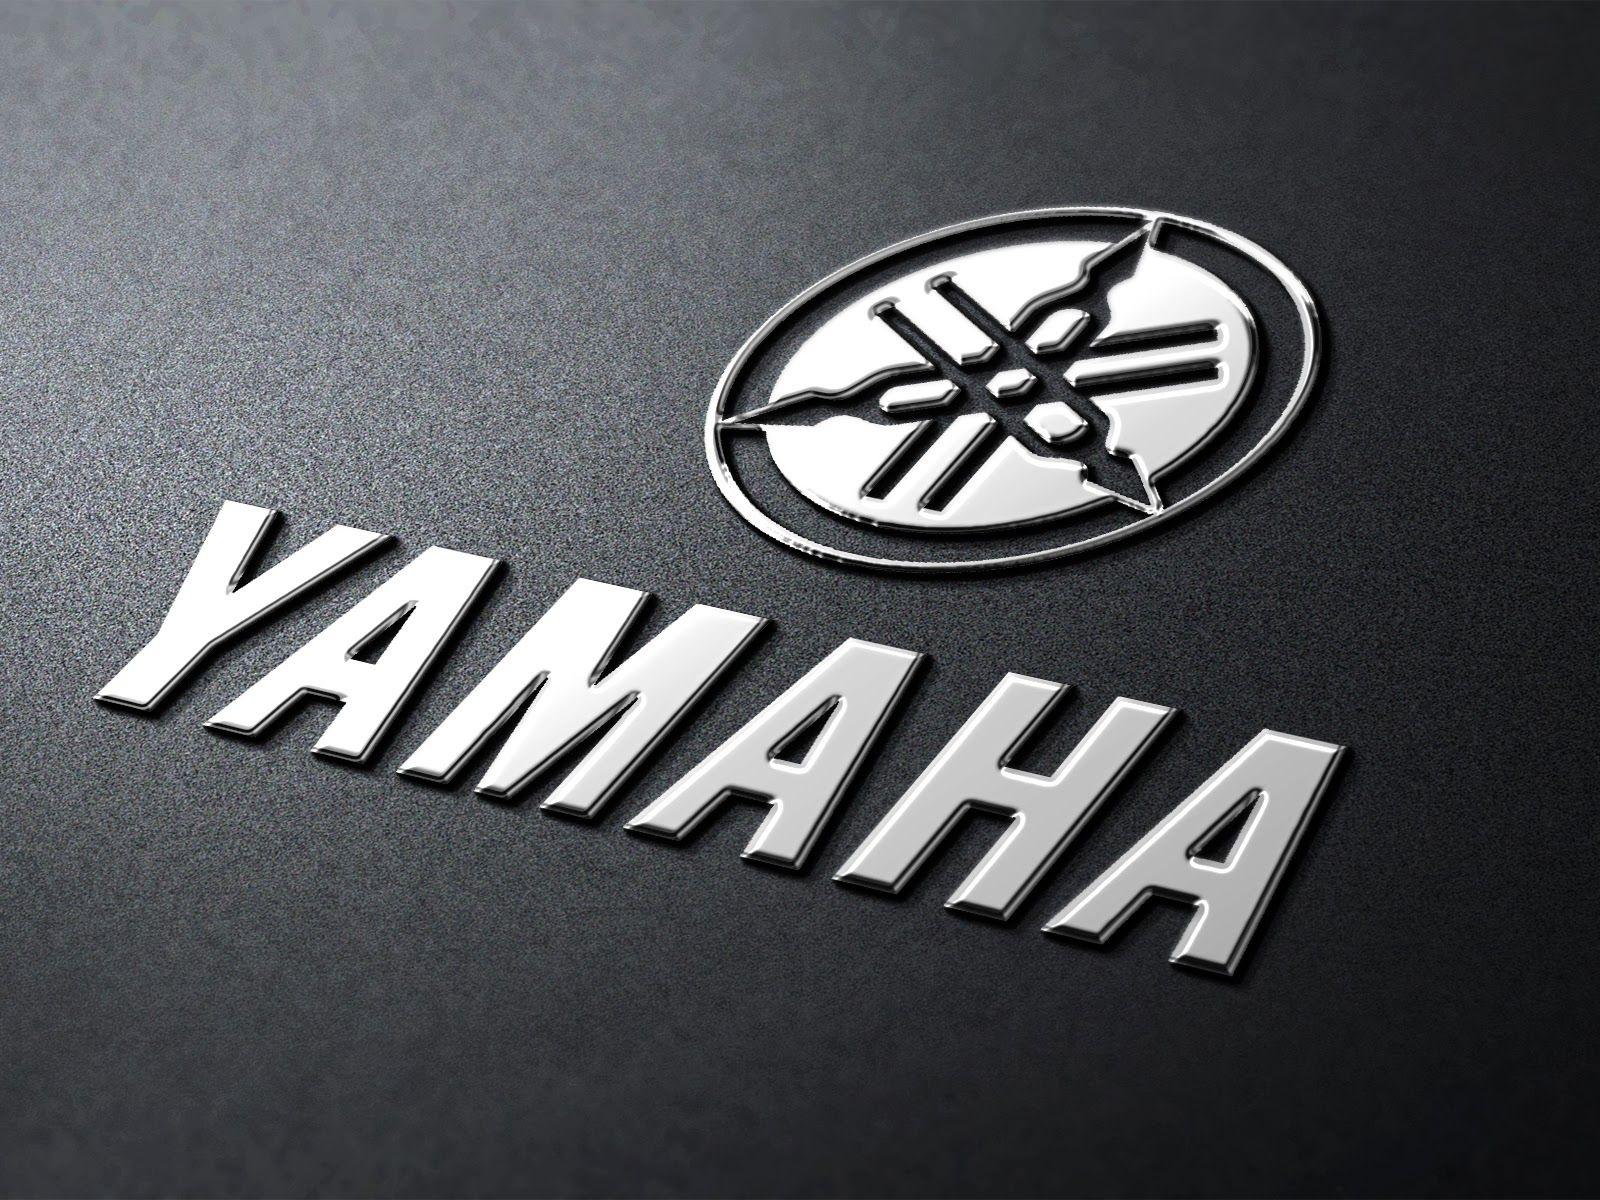 Yamaha Logo Wallpapers - Wallpaper Cave